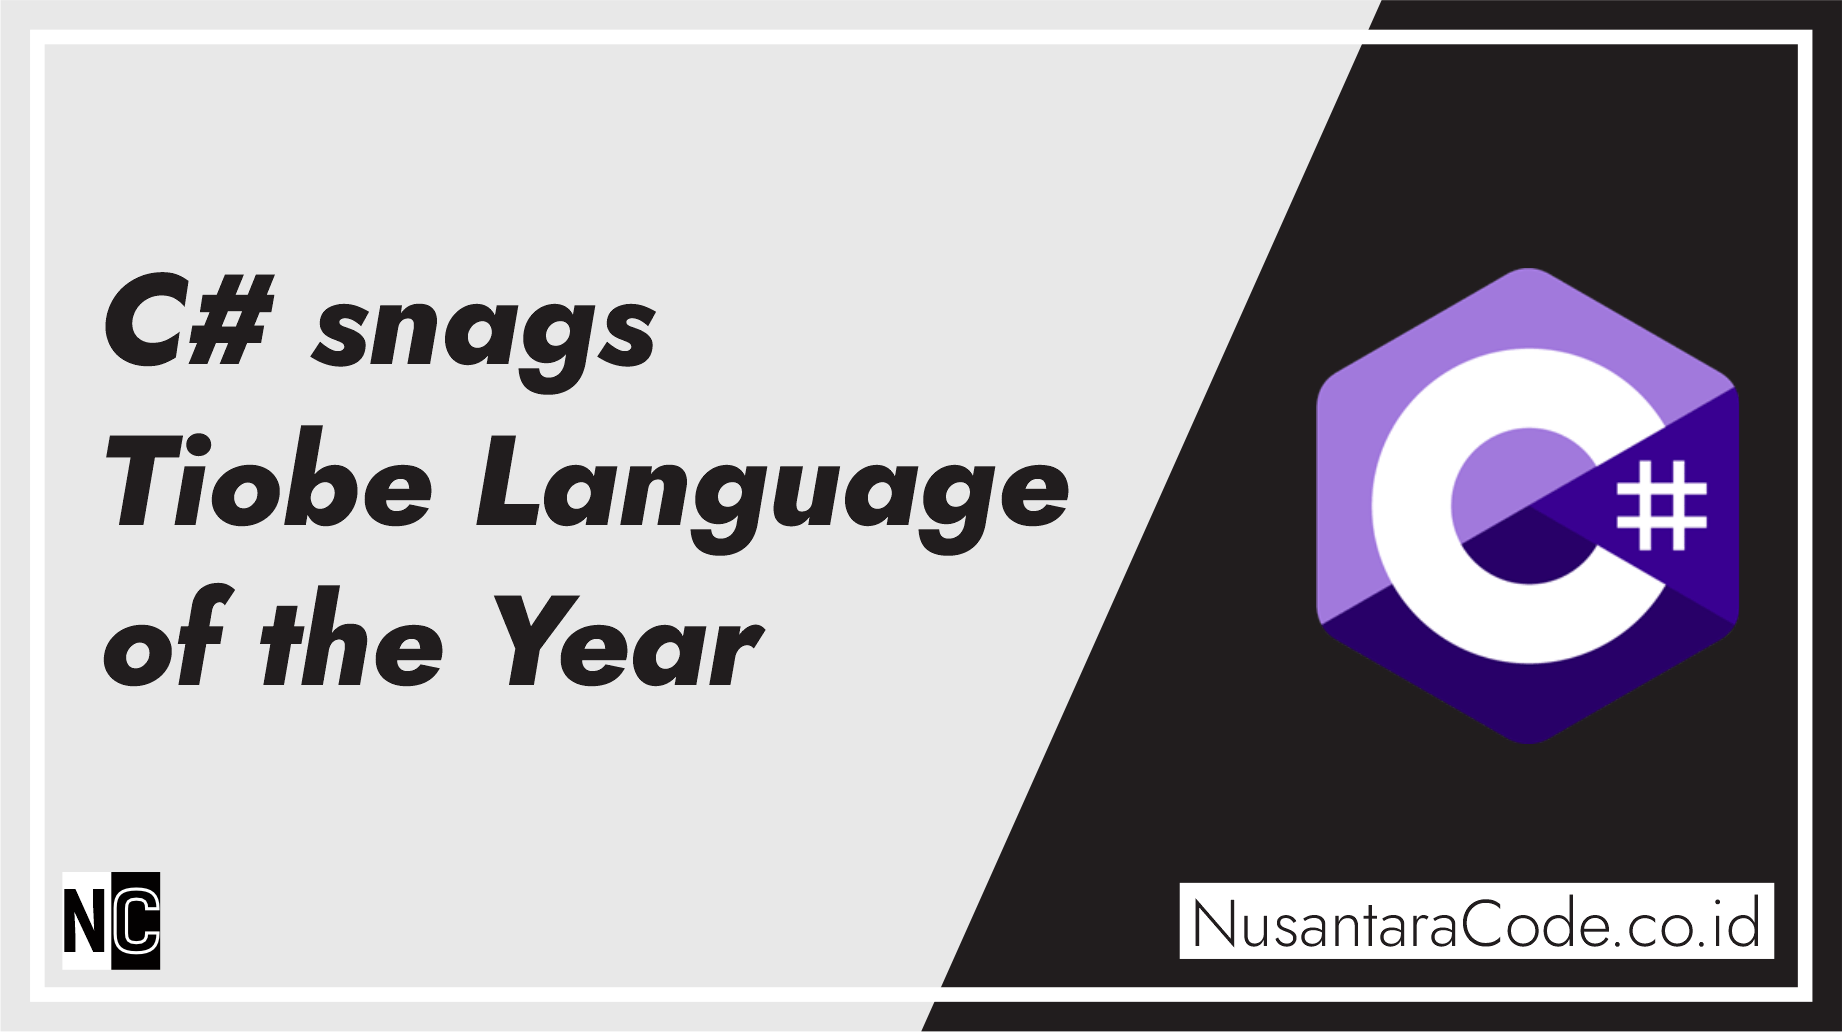 C# snags Tiobe Language of the Year